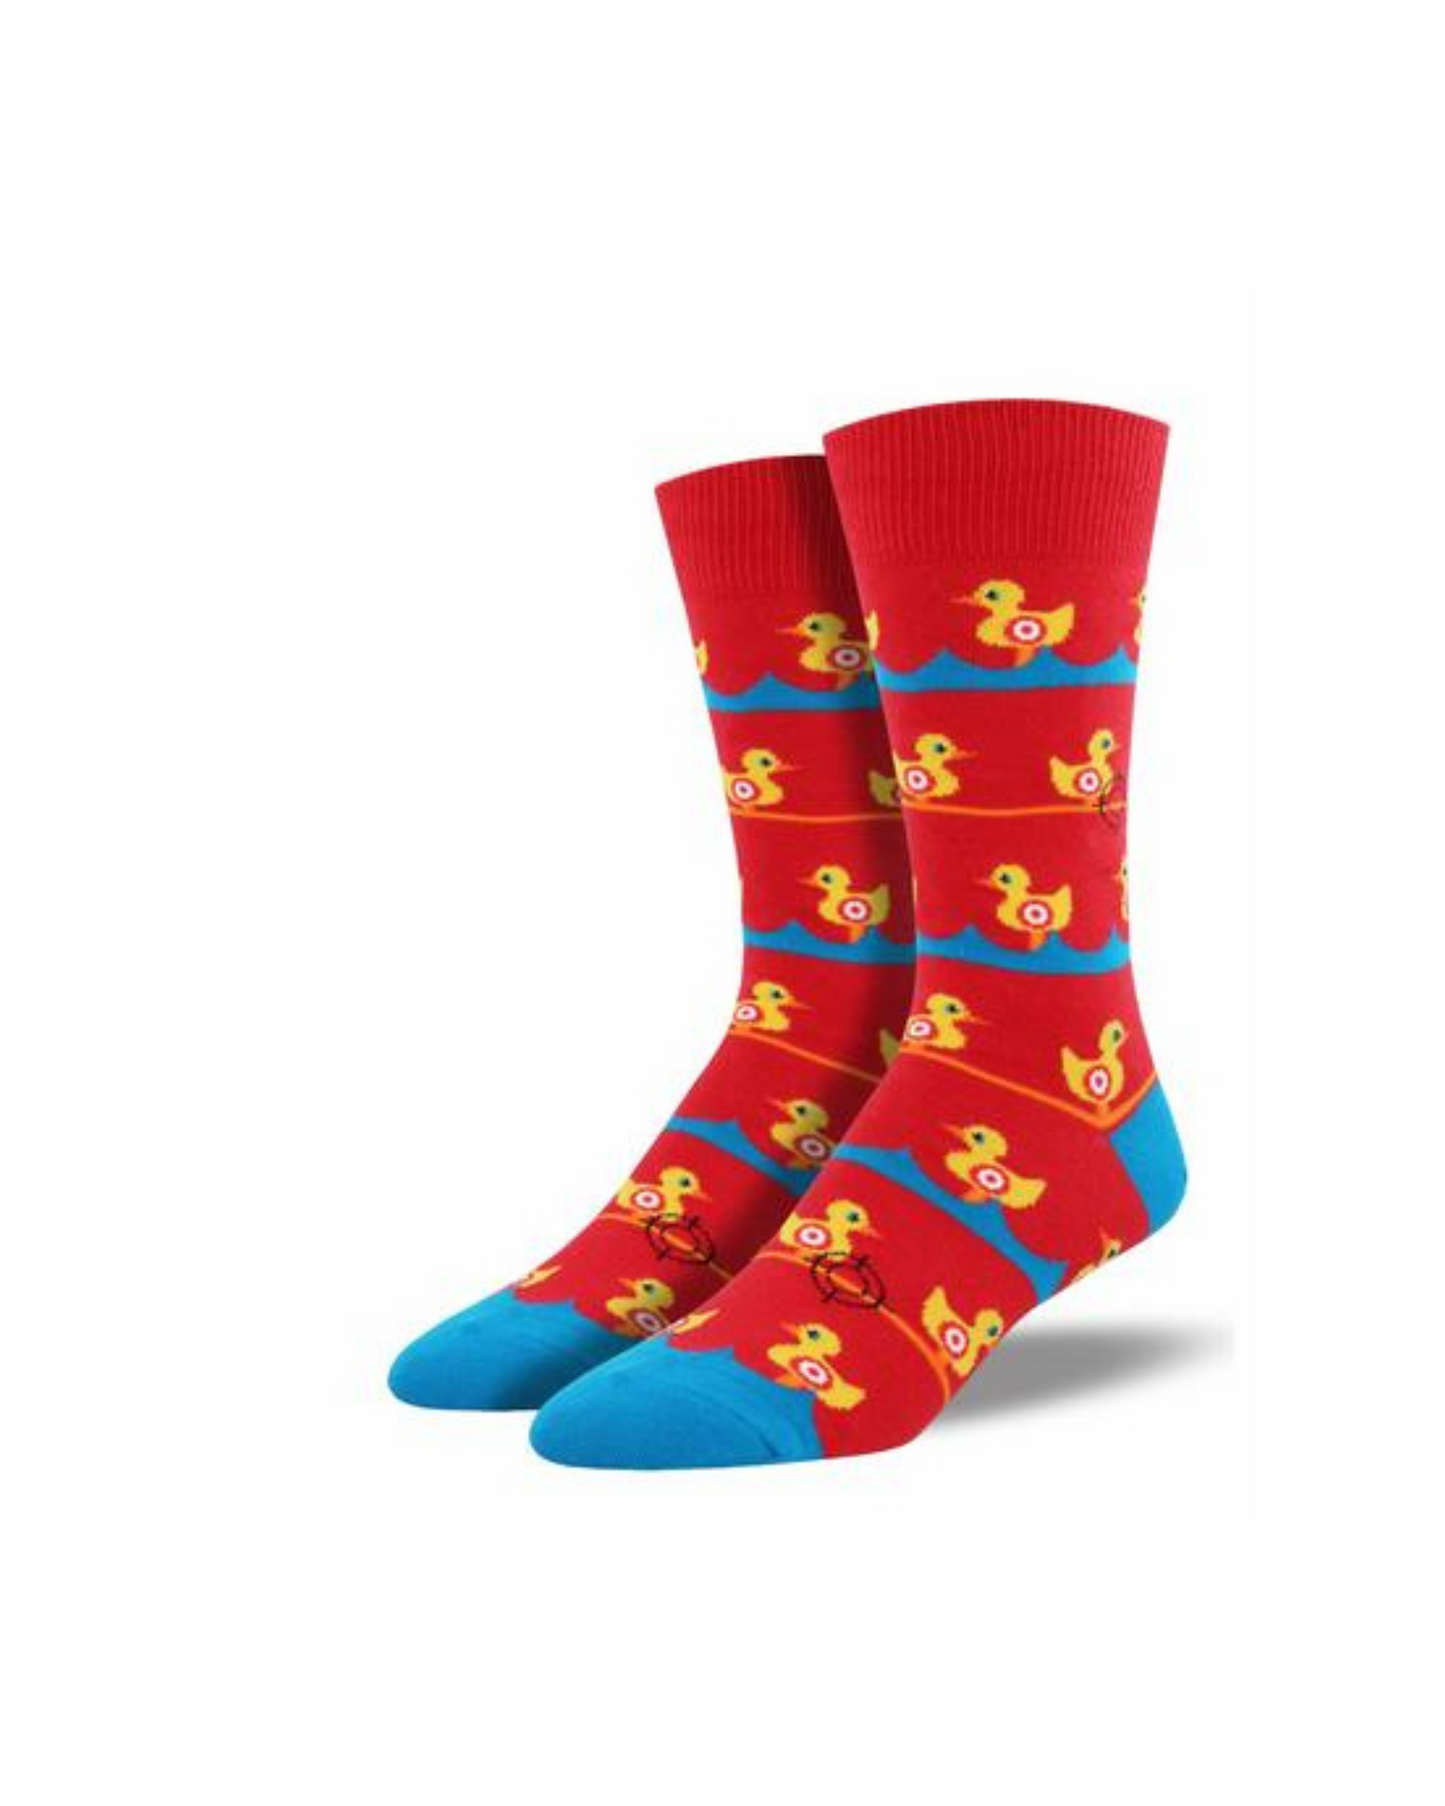 Socksmith Ducks In A Row Socks - Red - 21_e1278fa9-6d8a-4dc8-bff2-1a41b41f9972